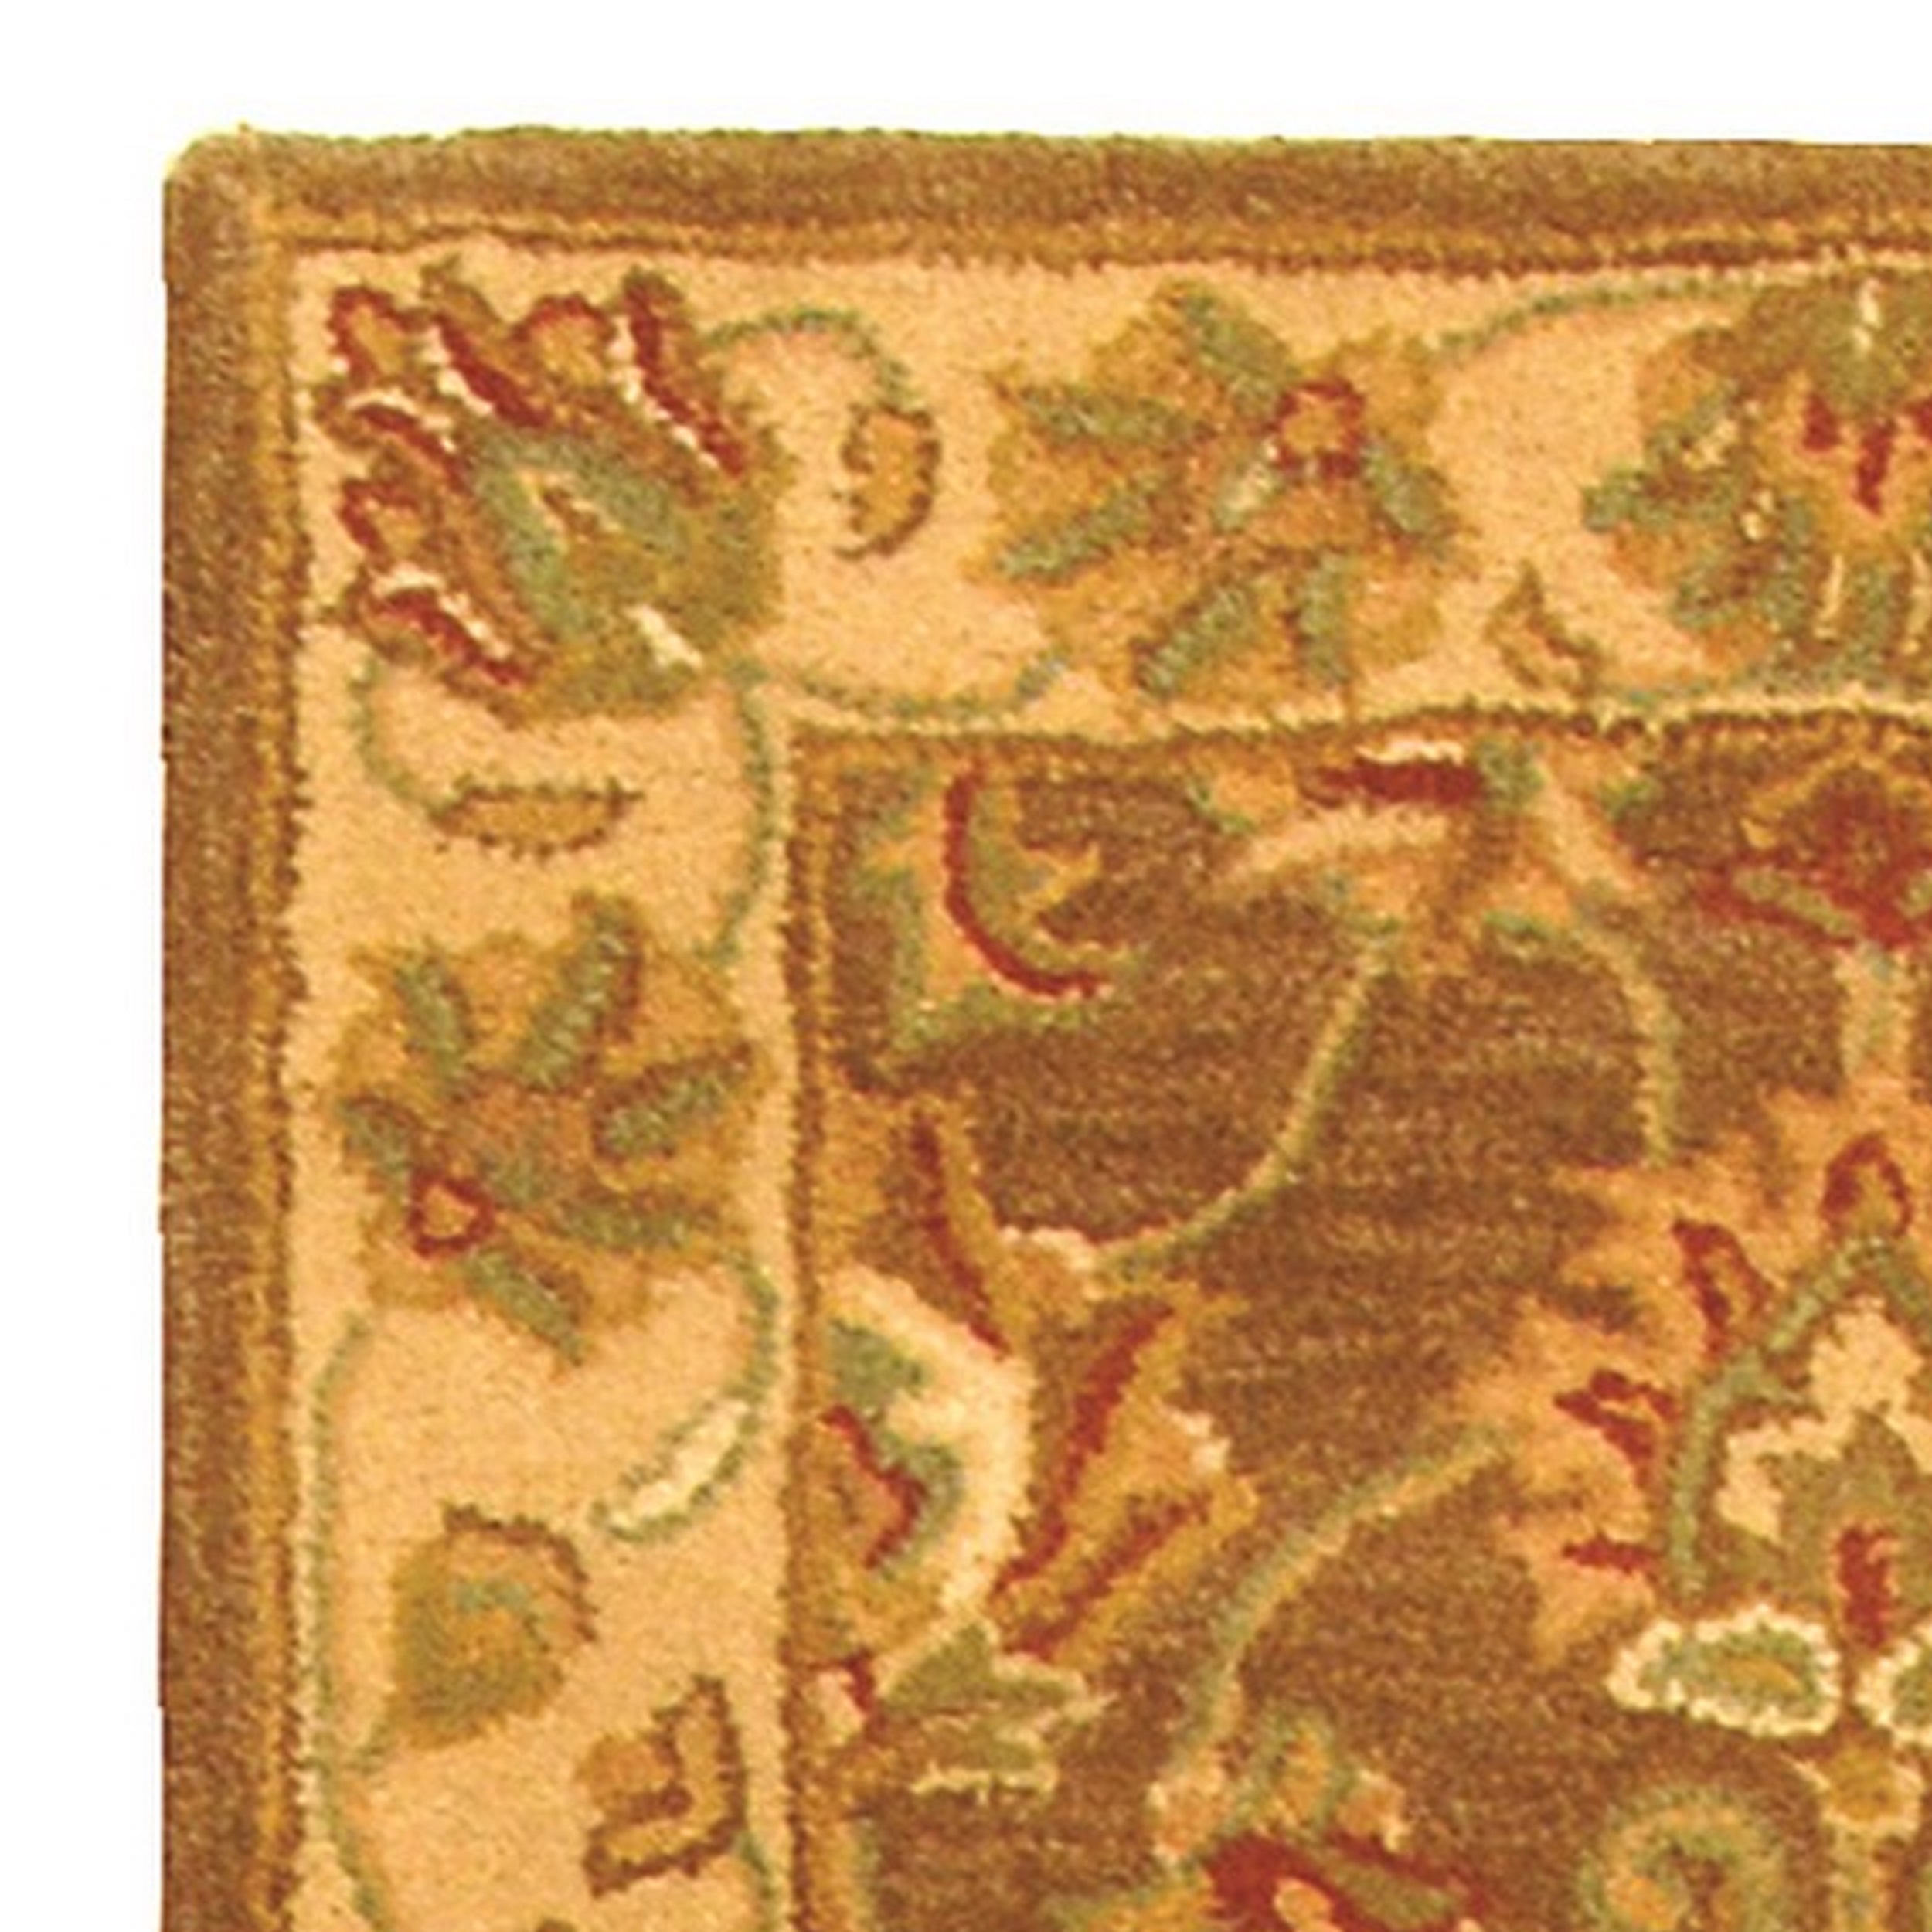 SAFAVIEH Heritage Regis Traditional Wool Area Rug, Brown/Ivory, 6' x 9' - image 2 of 4